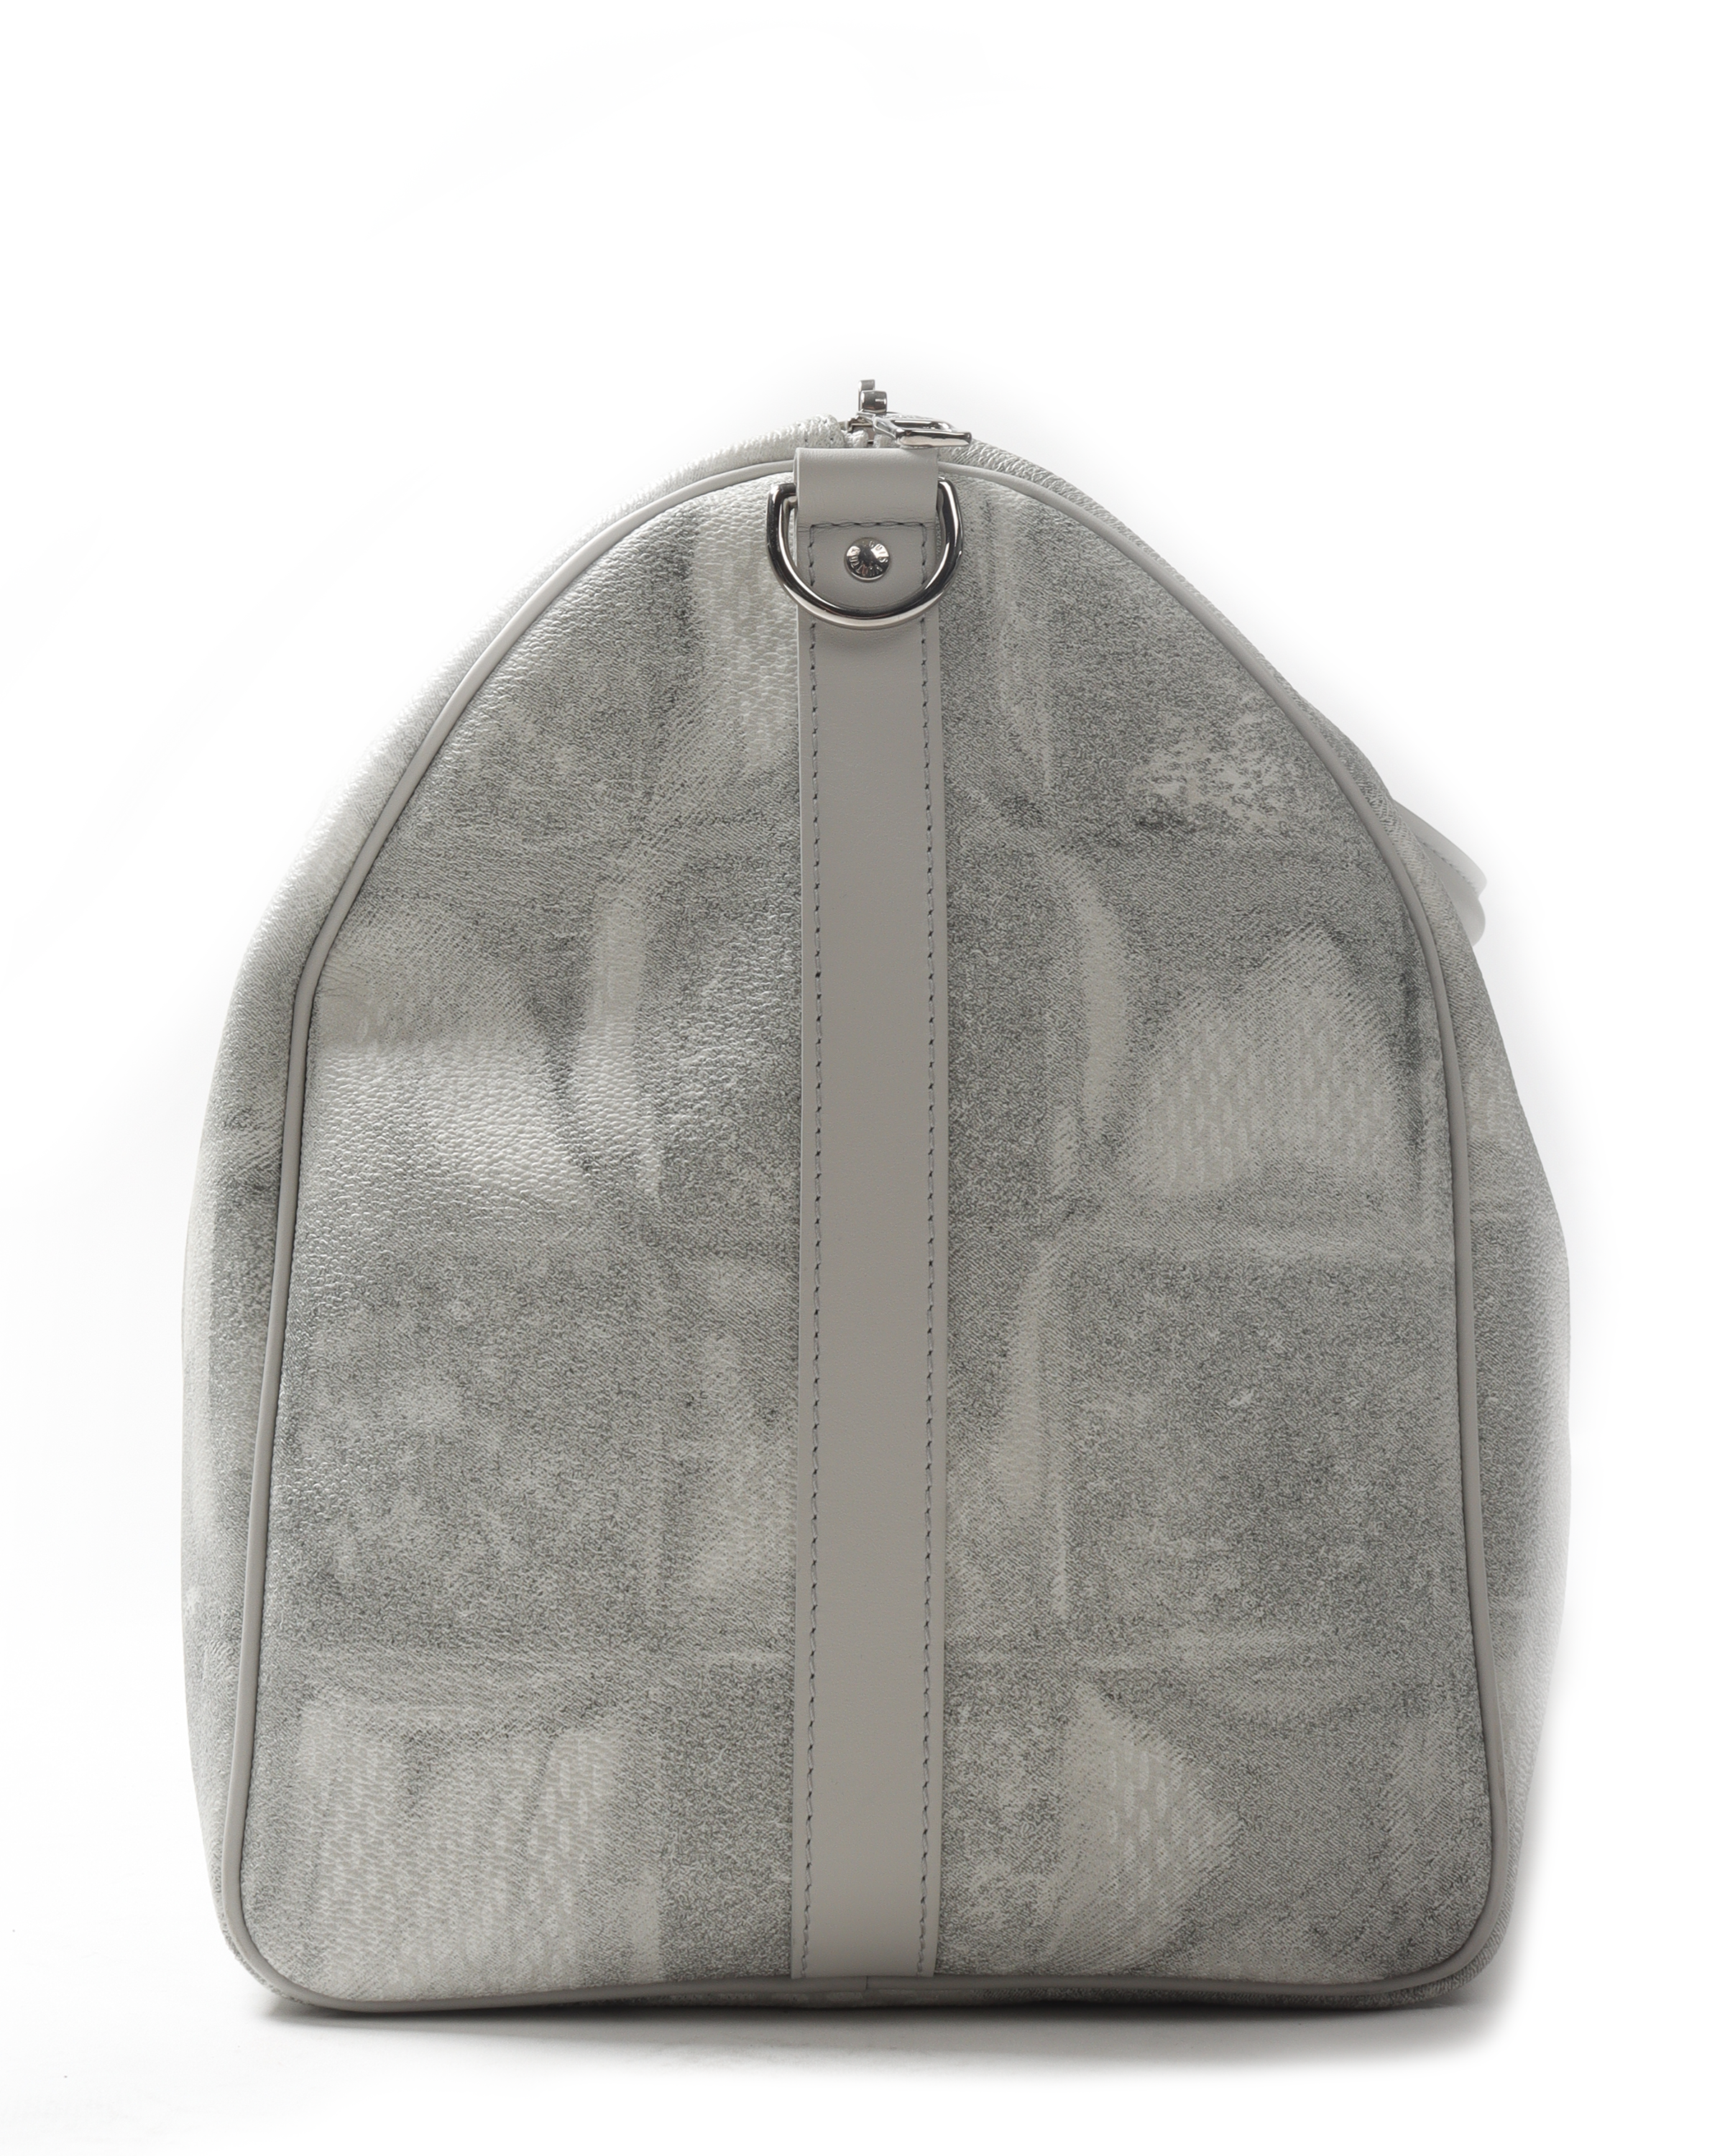 Luxury Handbags LOUIS VUITTON White Canvas Small Duffel 810-00385